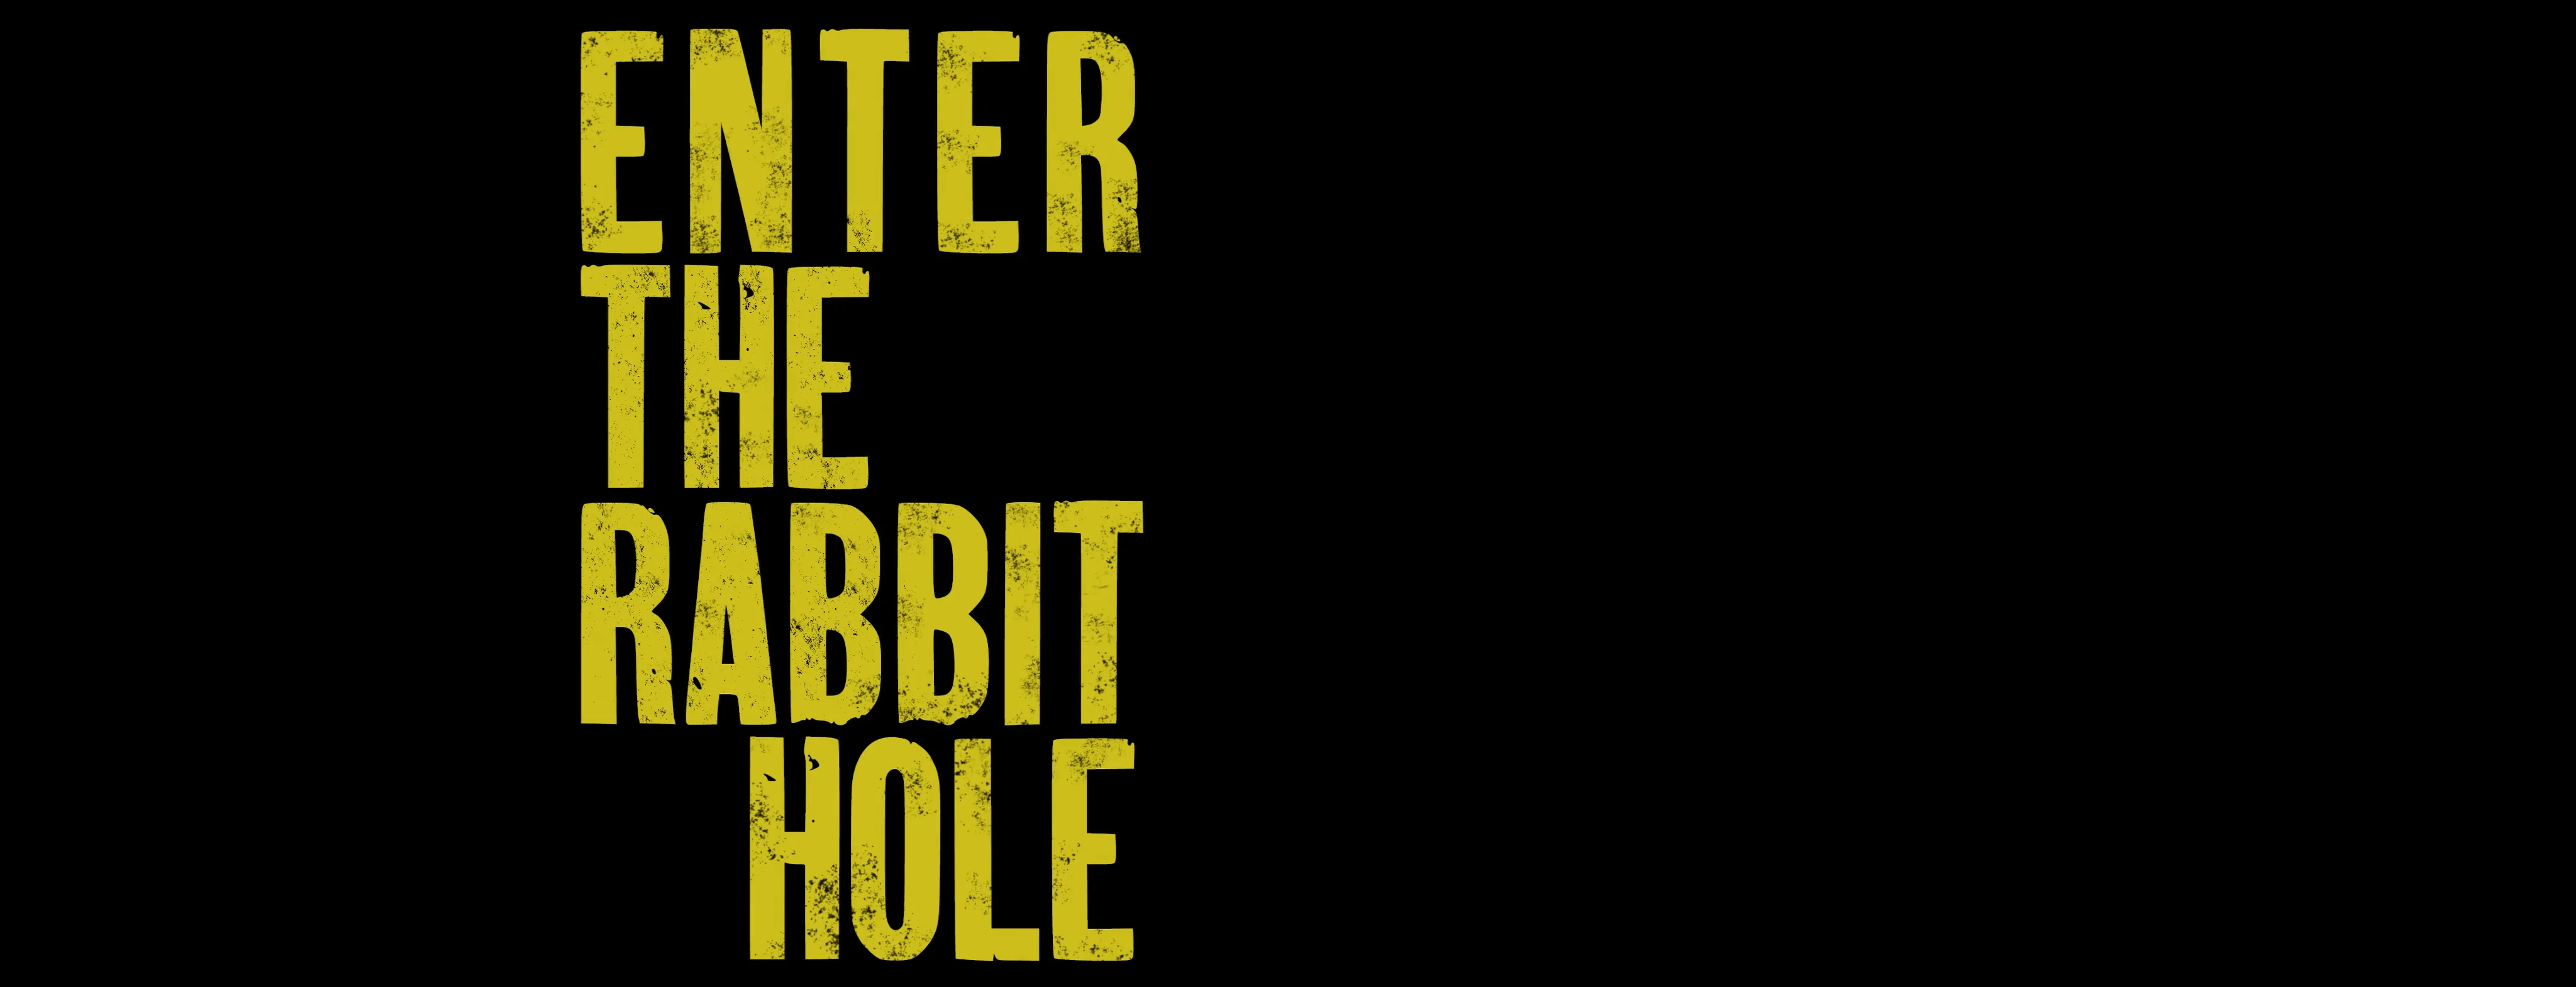 rabbit hole movie poster